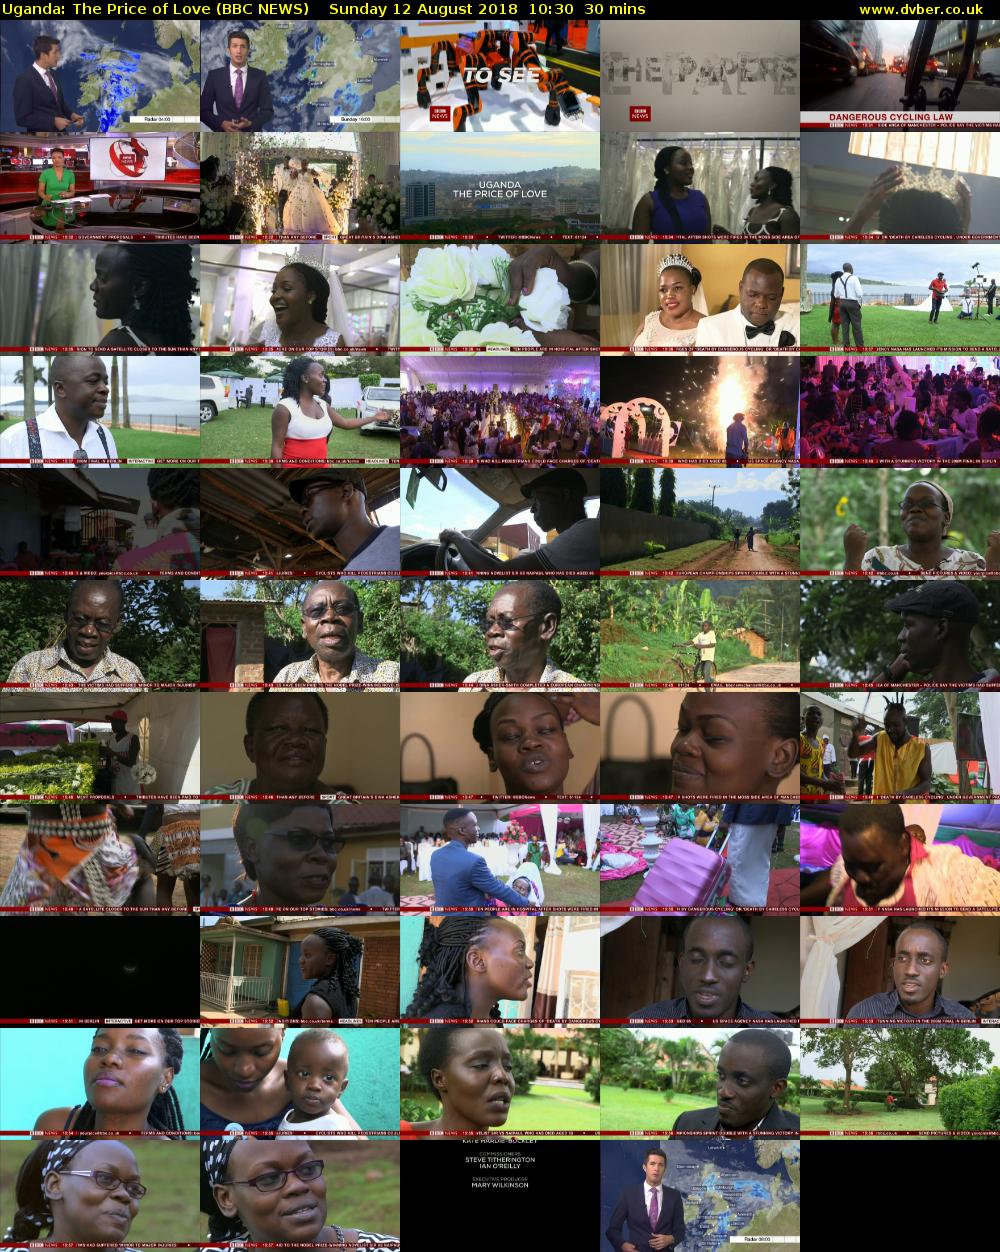 Uganda: The Price of Love (BBC NEWS) Sunday 12 August 2018 10:30 - 11:00